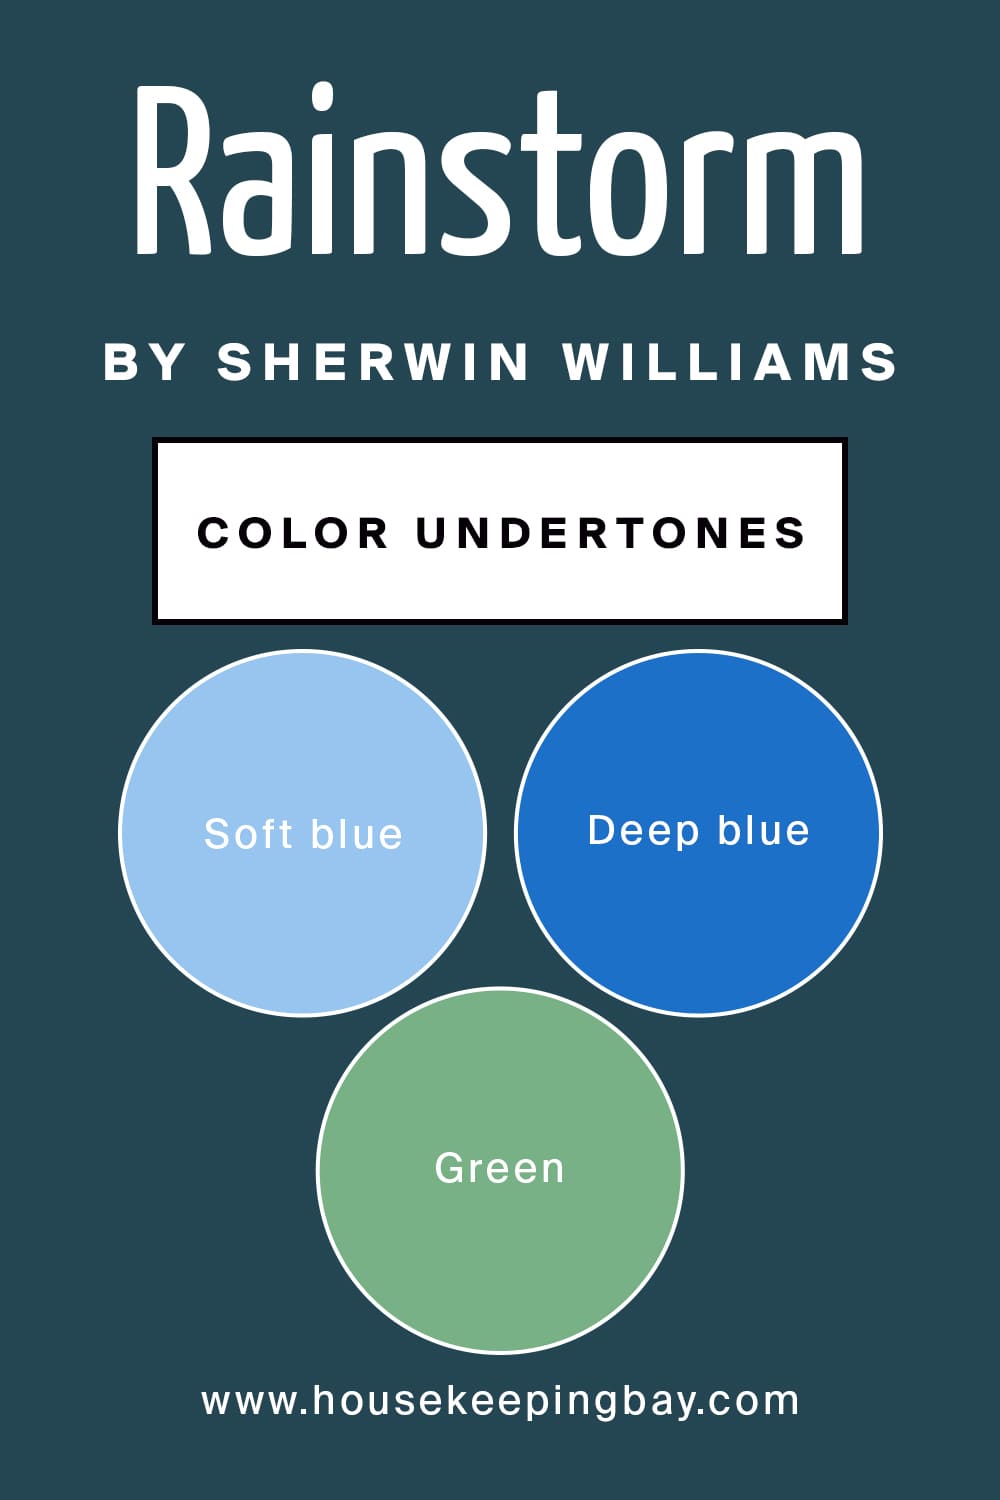 Rainstorm by Sherwin Williams Color Undertones